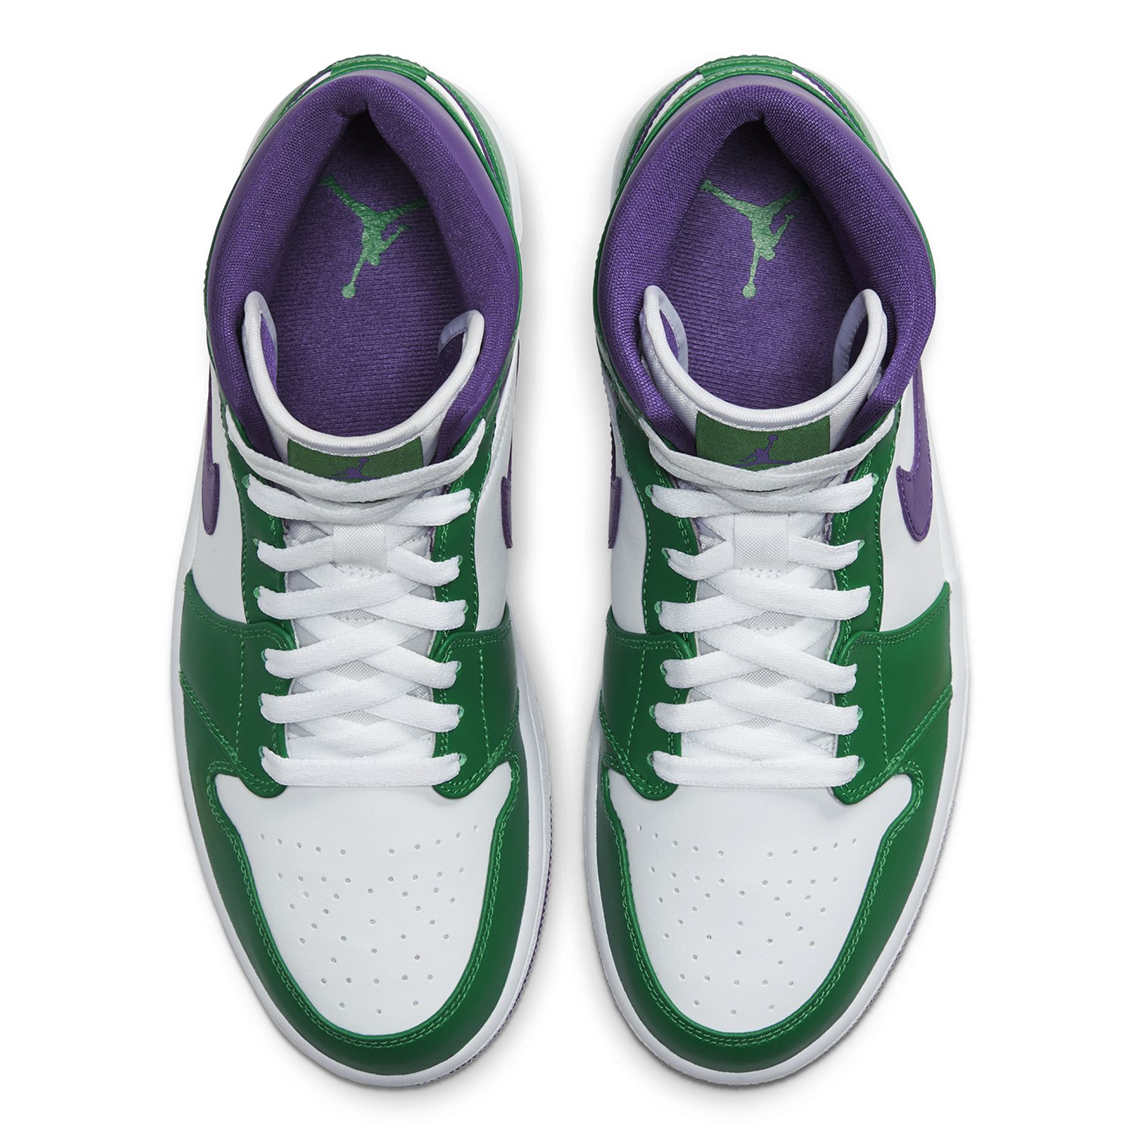 jordan 1s green and purple